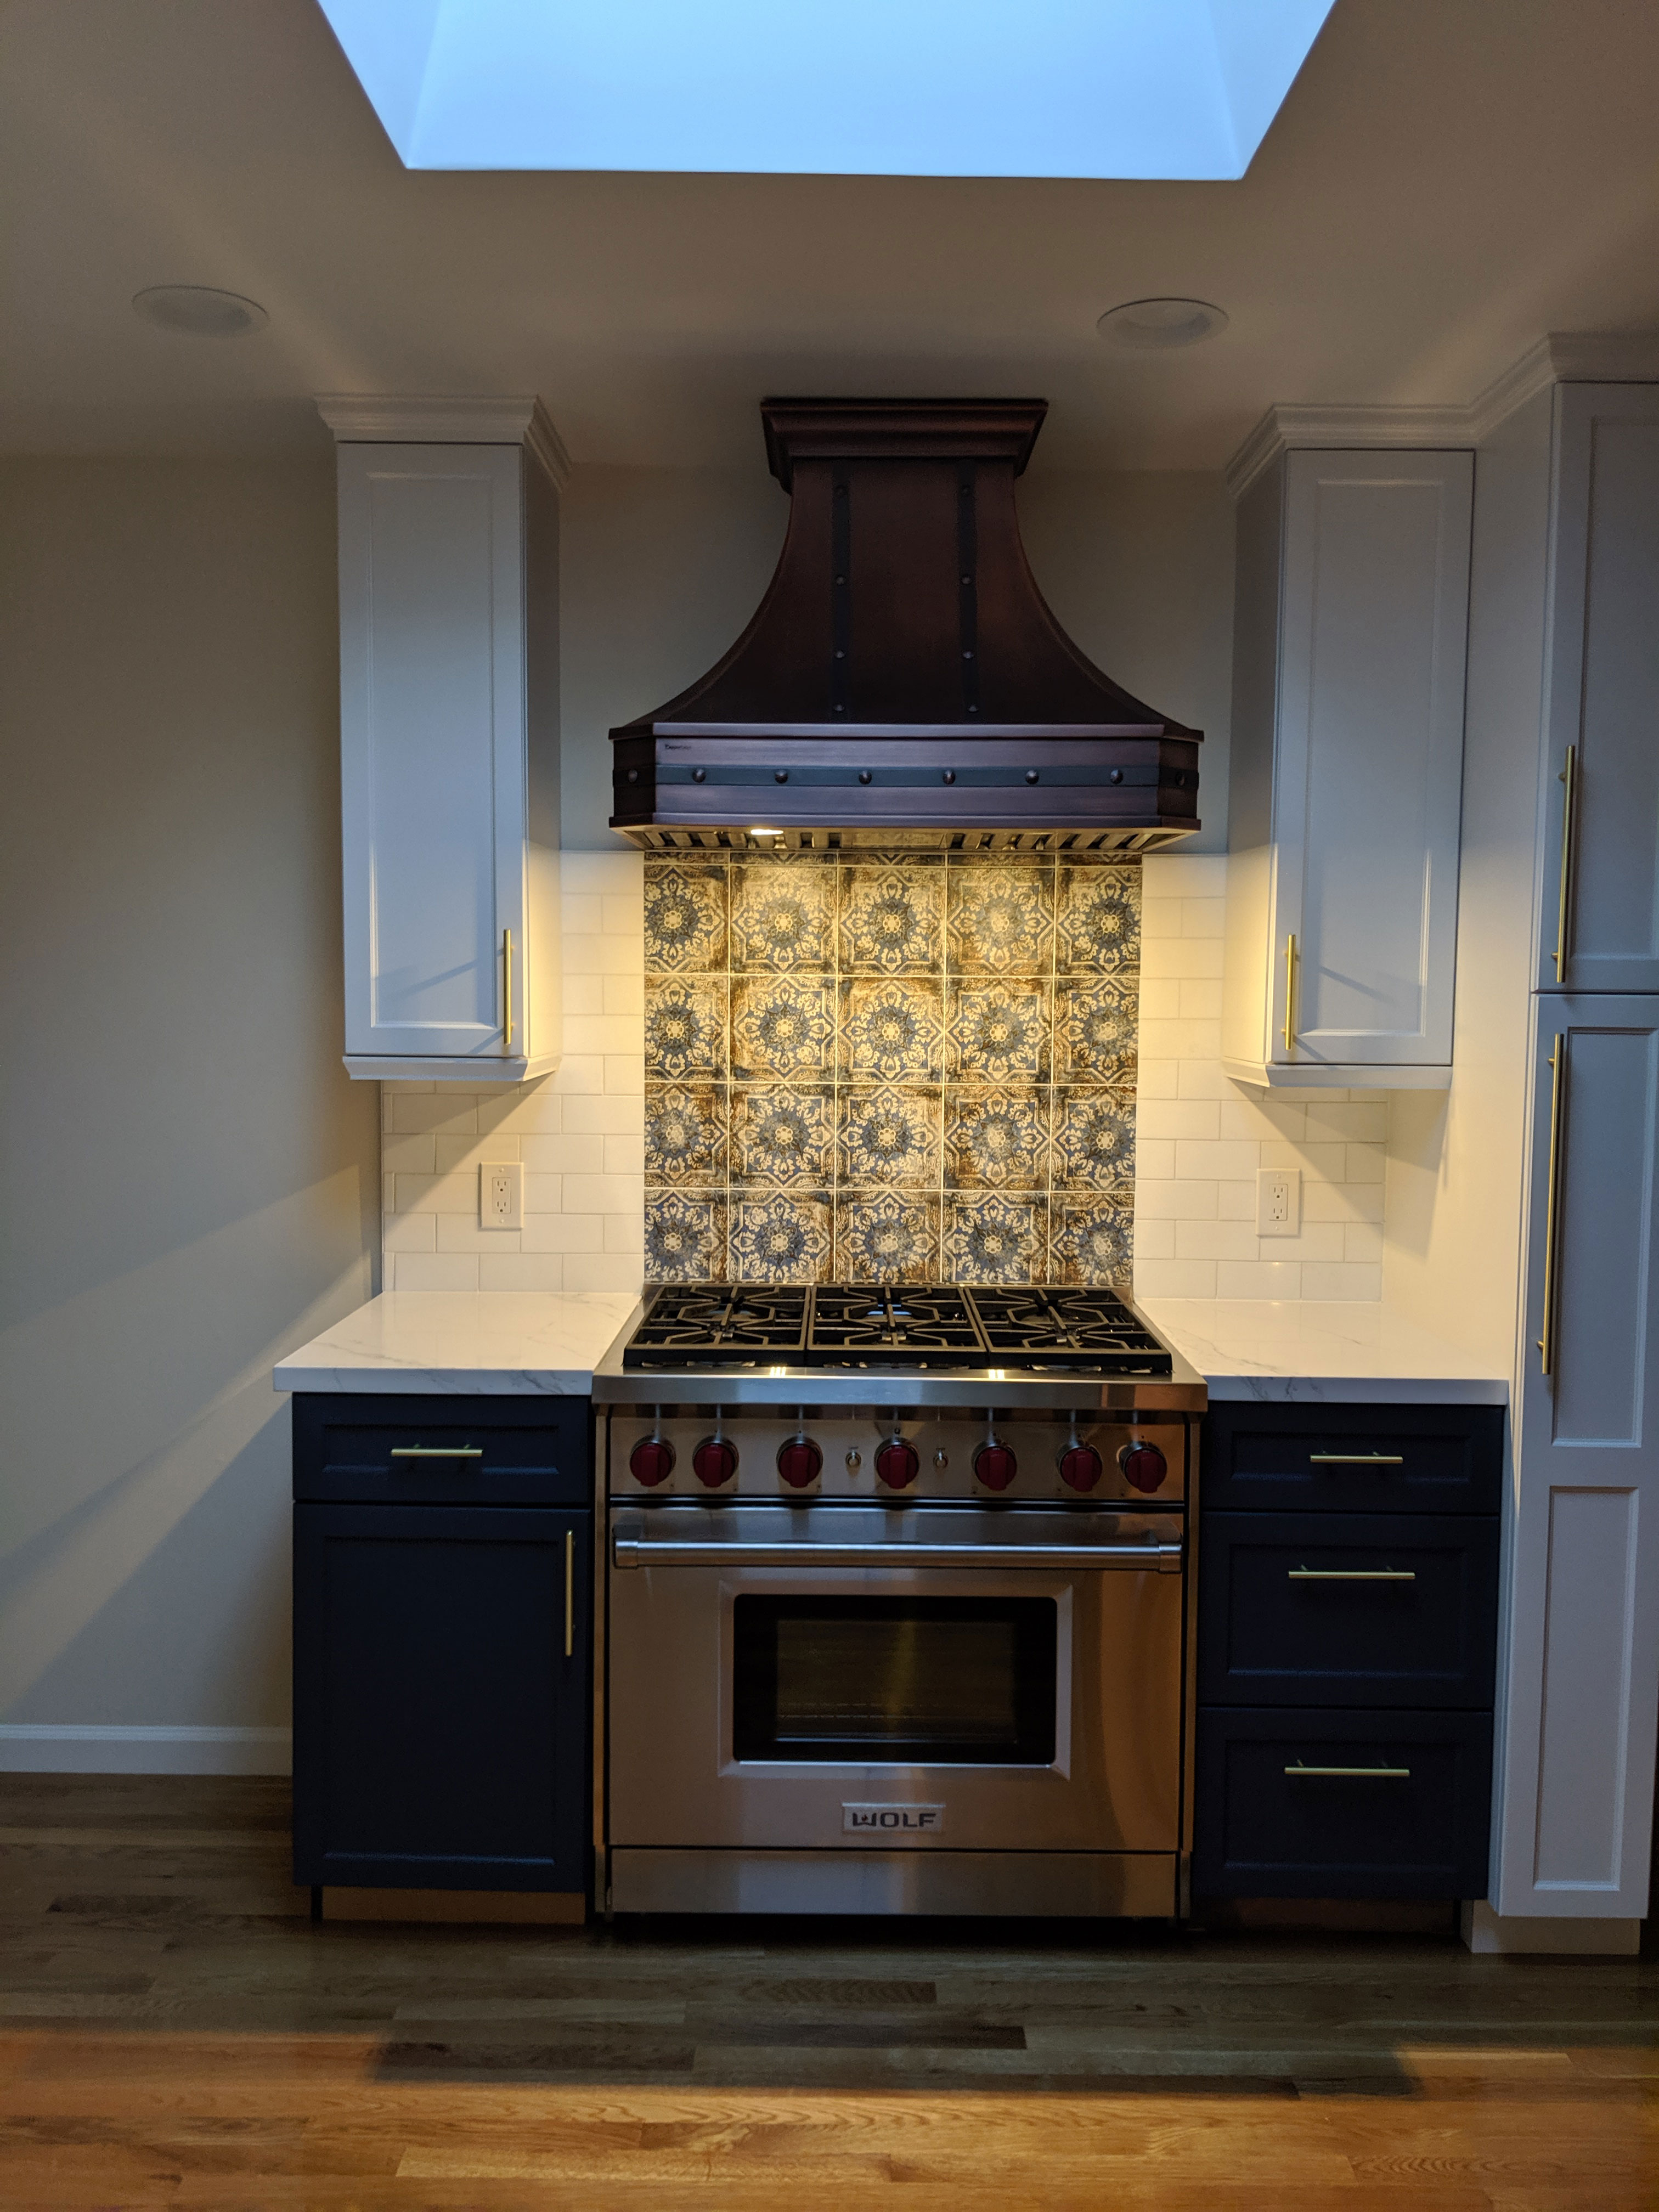 Cottage kitchen design with, inspiring range hood , blue cabinets,marble countertops, stunning marble backsplash